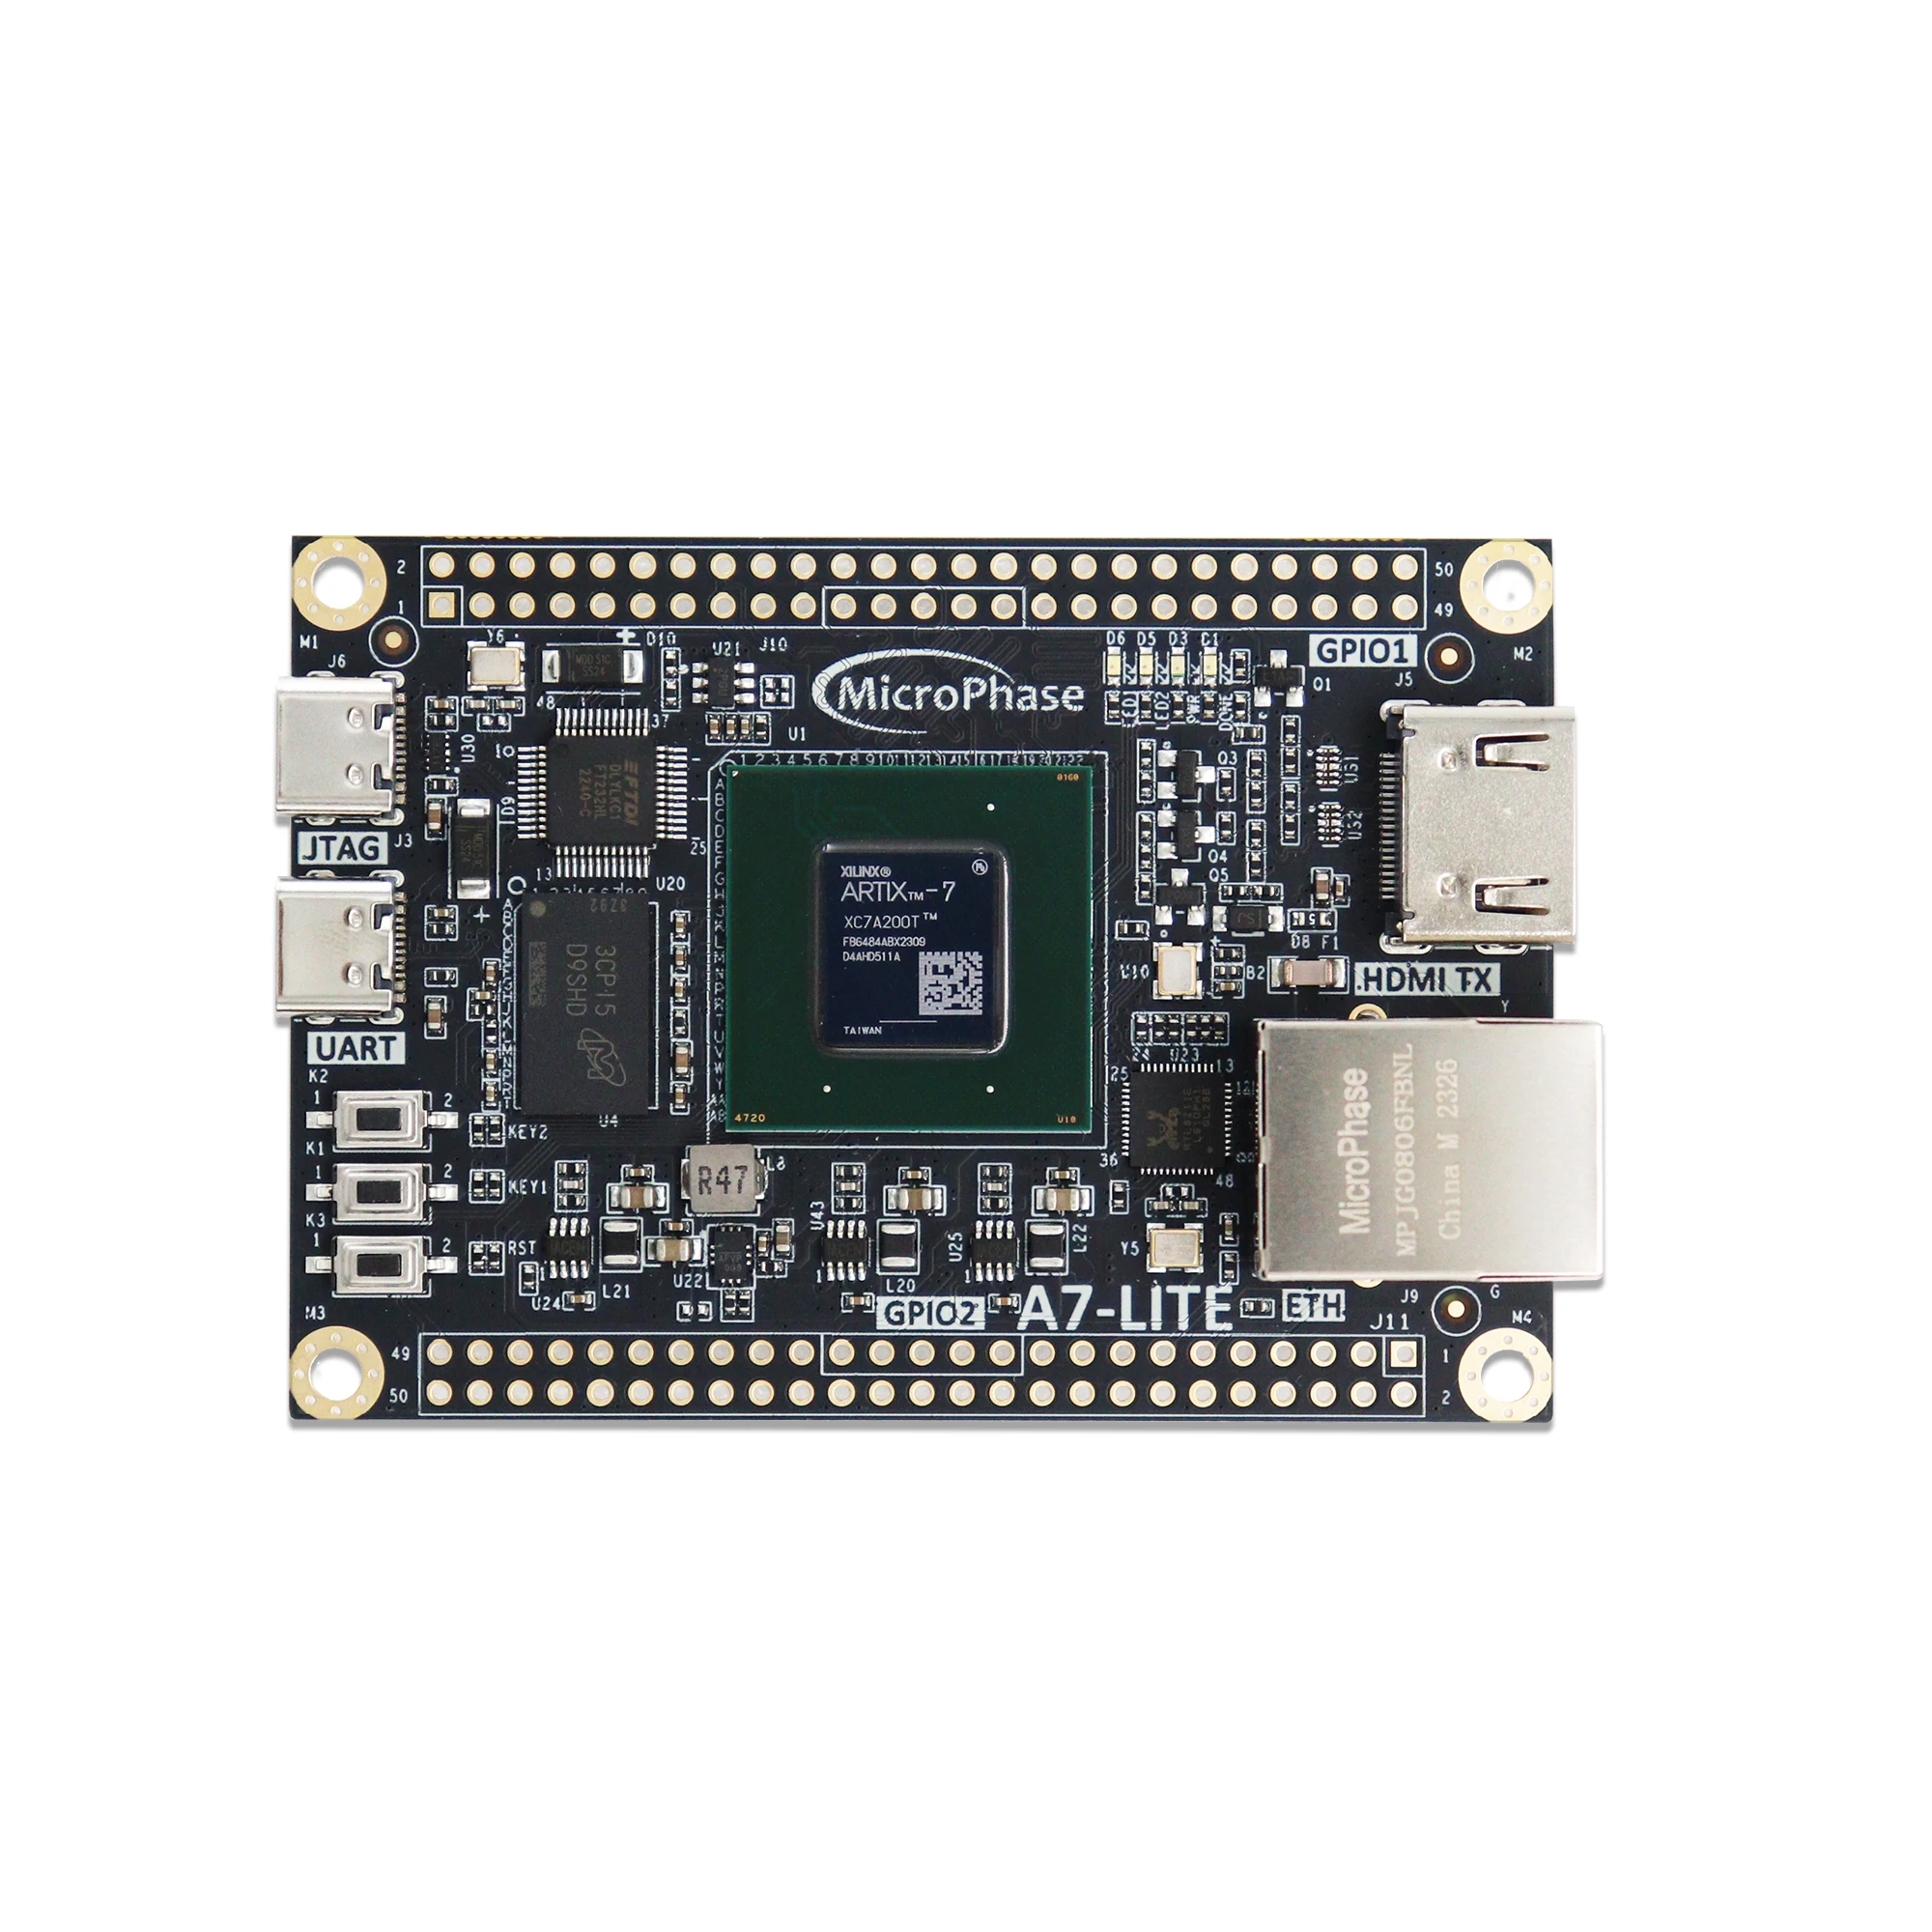 

MicroPhase A7-Lite Xilinx Artix-7 FPGA XC7A35T XC7A100T AC7A200T FPGA Development Board Kit Core Borad